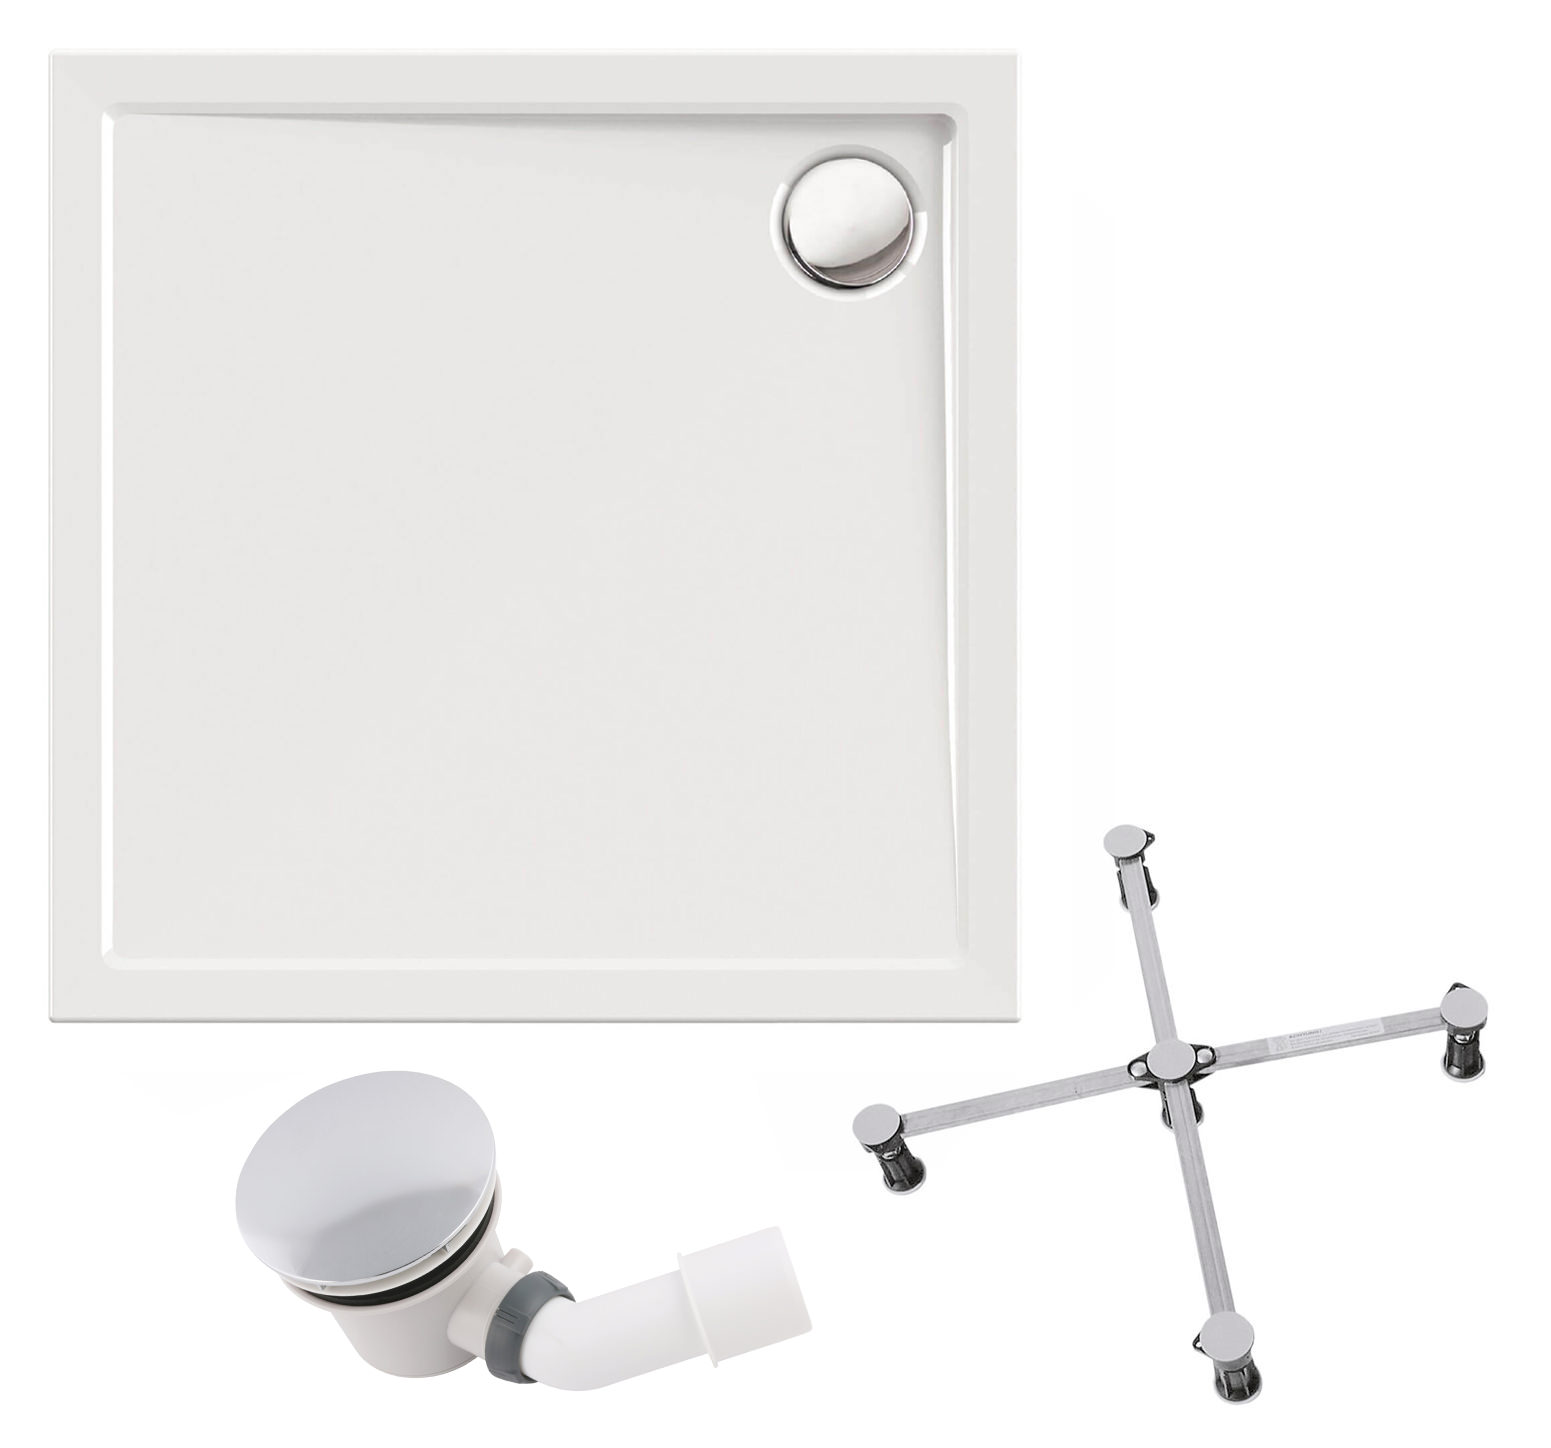 Komplett-Set Quadrat-Brausewanne Modern Select mit Wannenfuß und Ablaufgarnitur, 90 x 90 x 2,5 cm